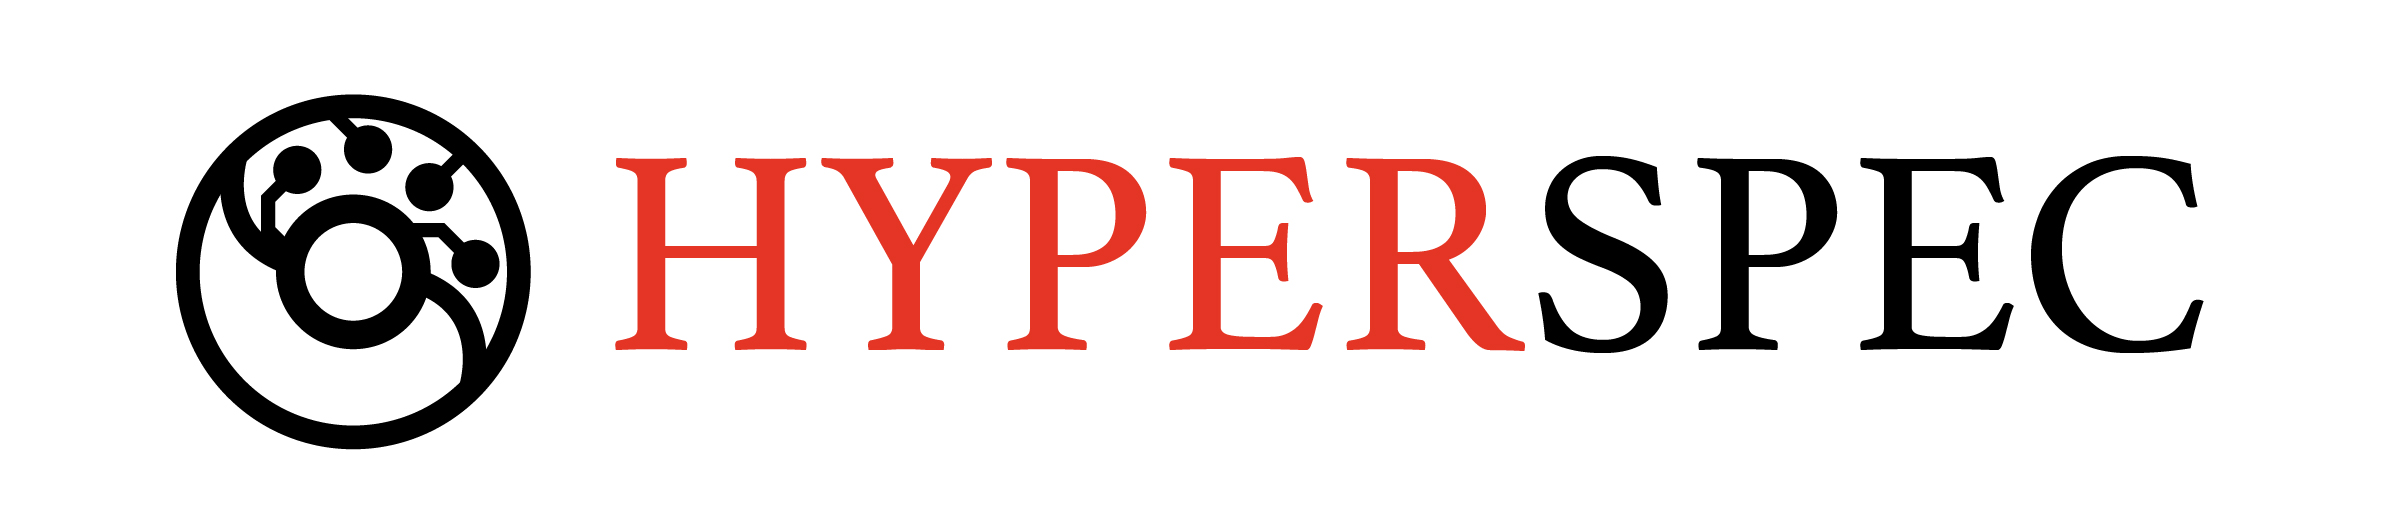 Hyperspec Logo Banner White Background